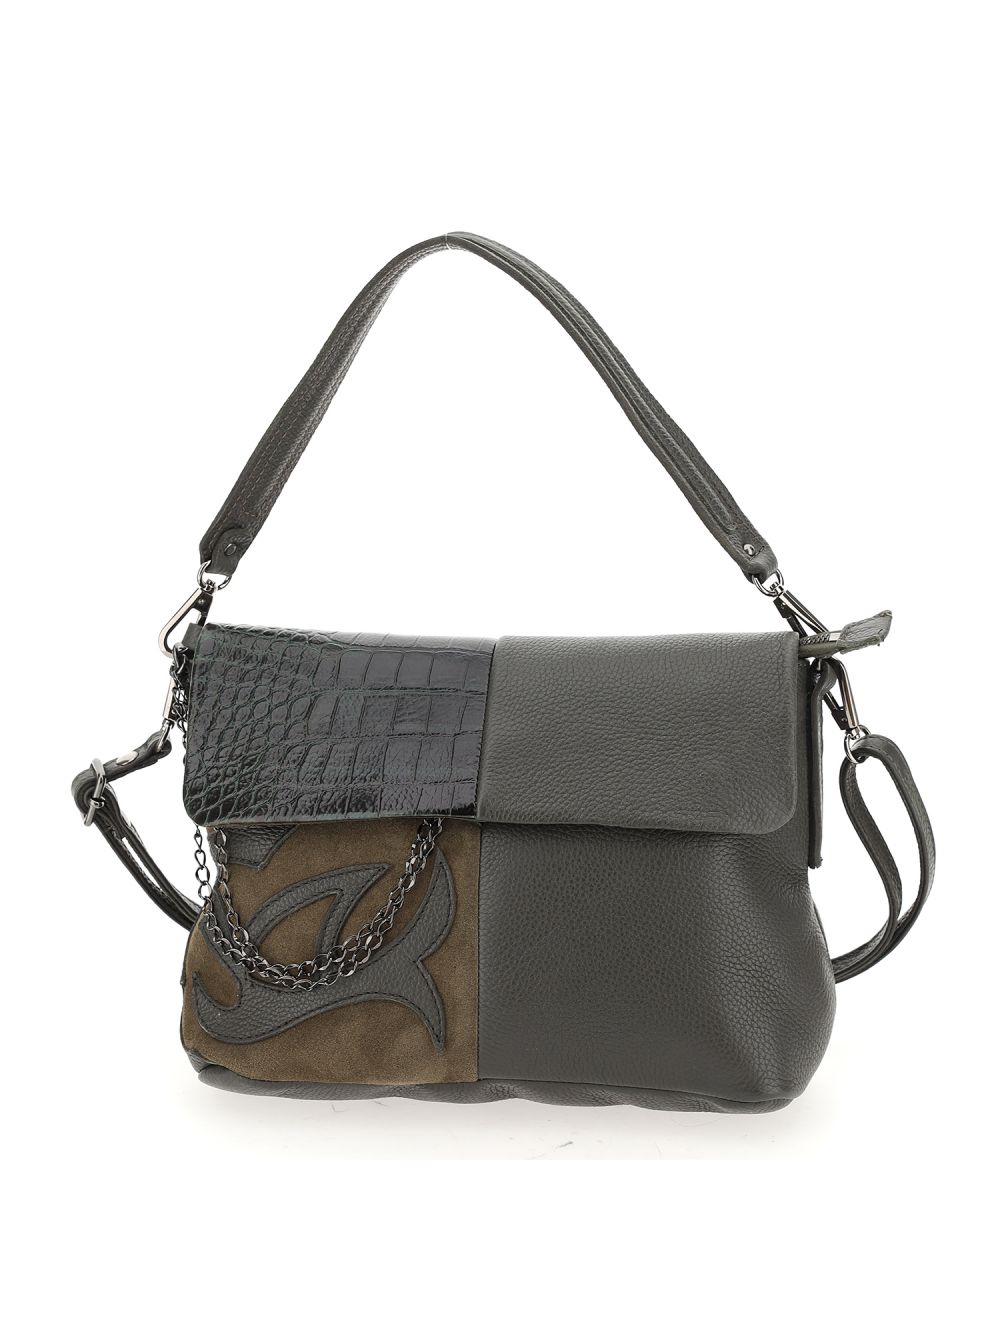 Borse in Pelle - Made in Italy - Handbag / Shoulder bag - Catawiki